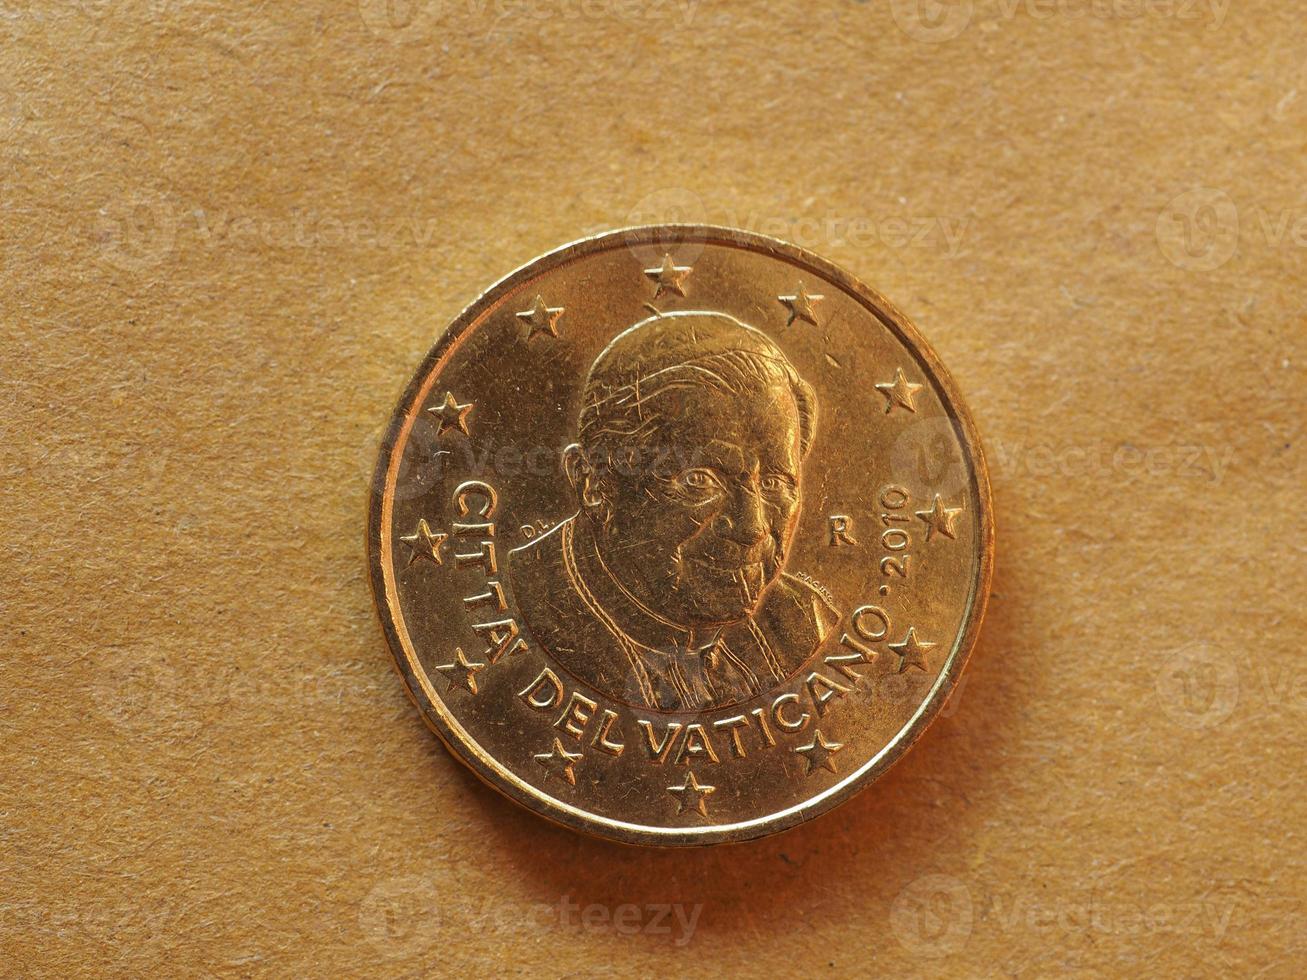 50 cents coin, European Union photo